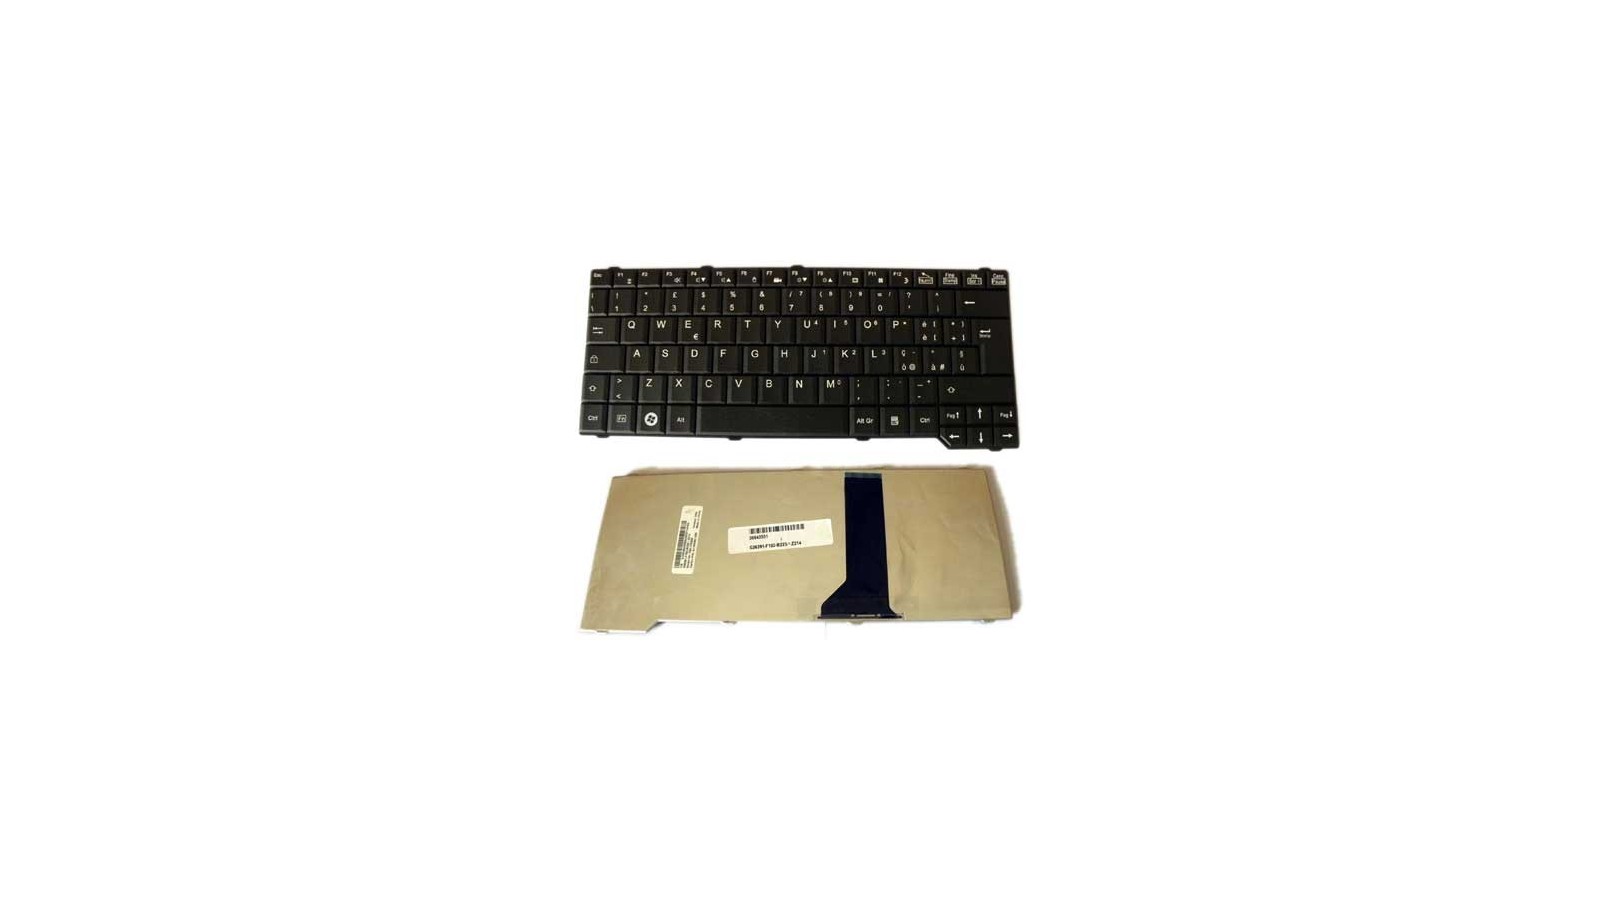 Tastiera nera italiana per notebook compatibile con Fujitsu Amilo PA3553 PA3515 V6515 V6535 V6545 V6555